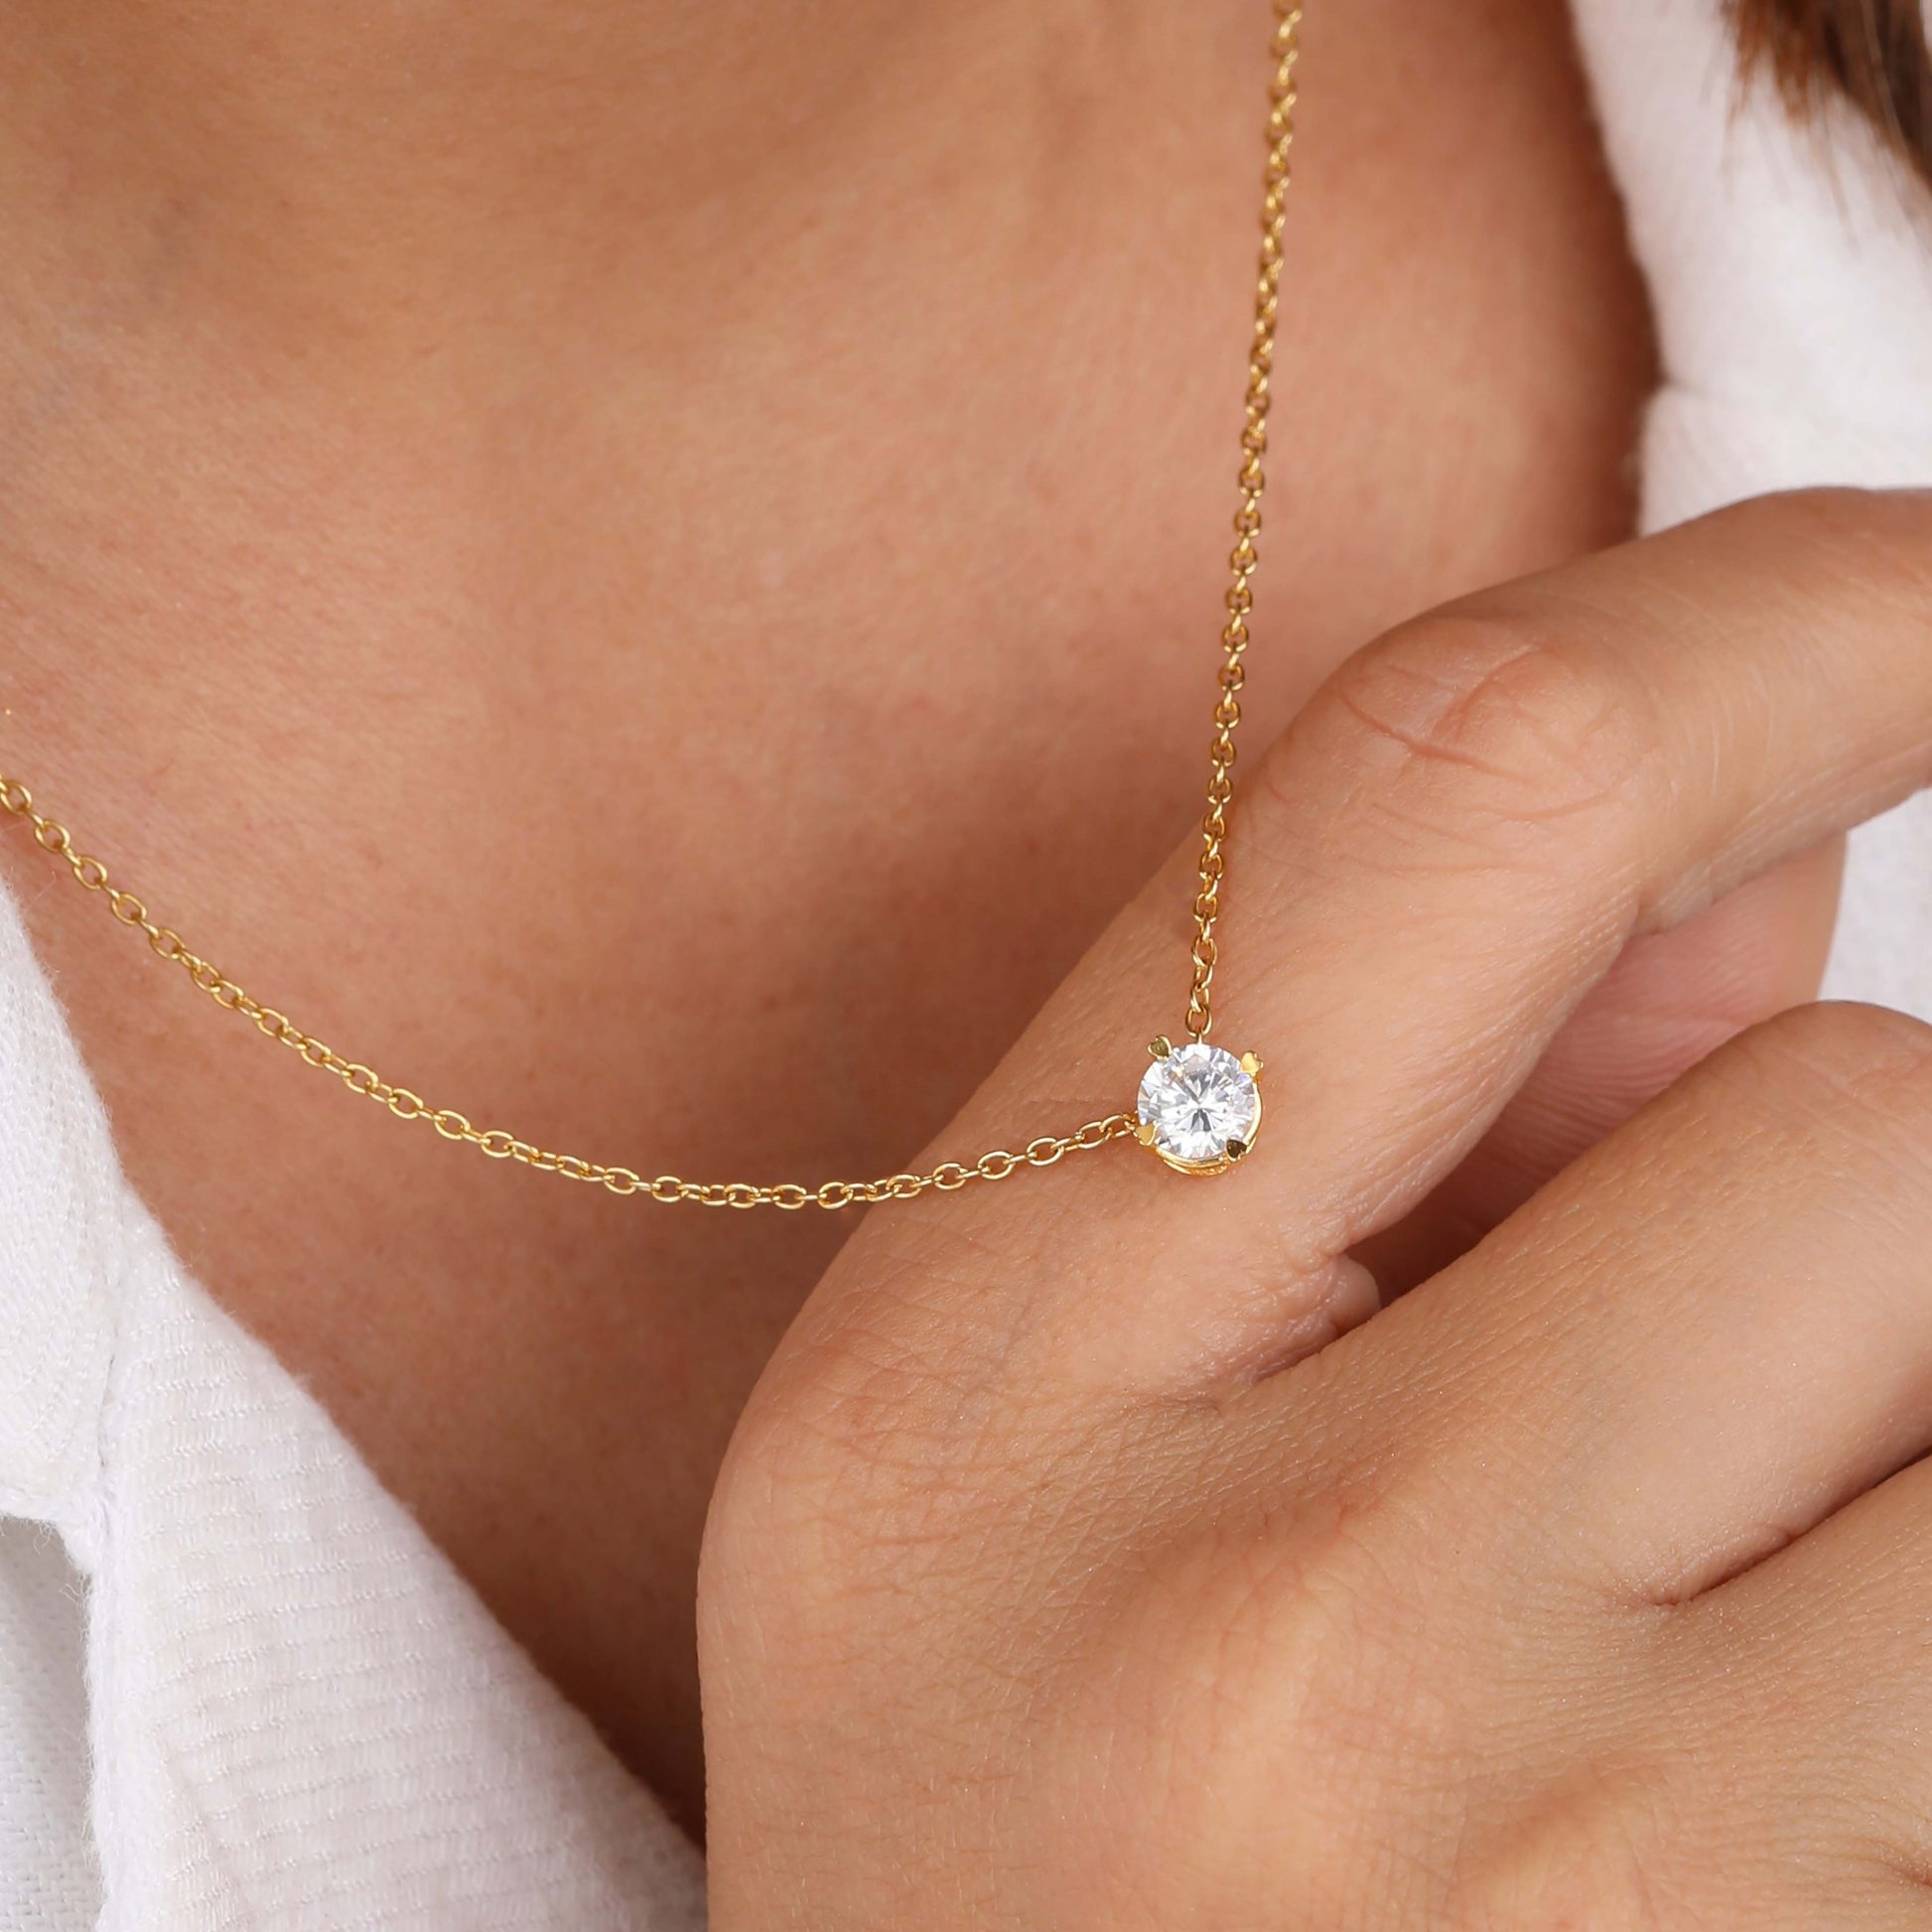 Round diamond solitaire necklace